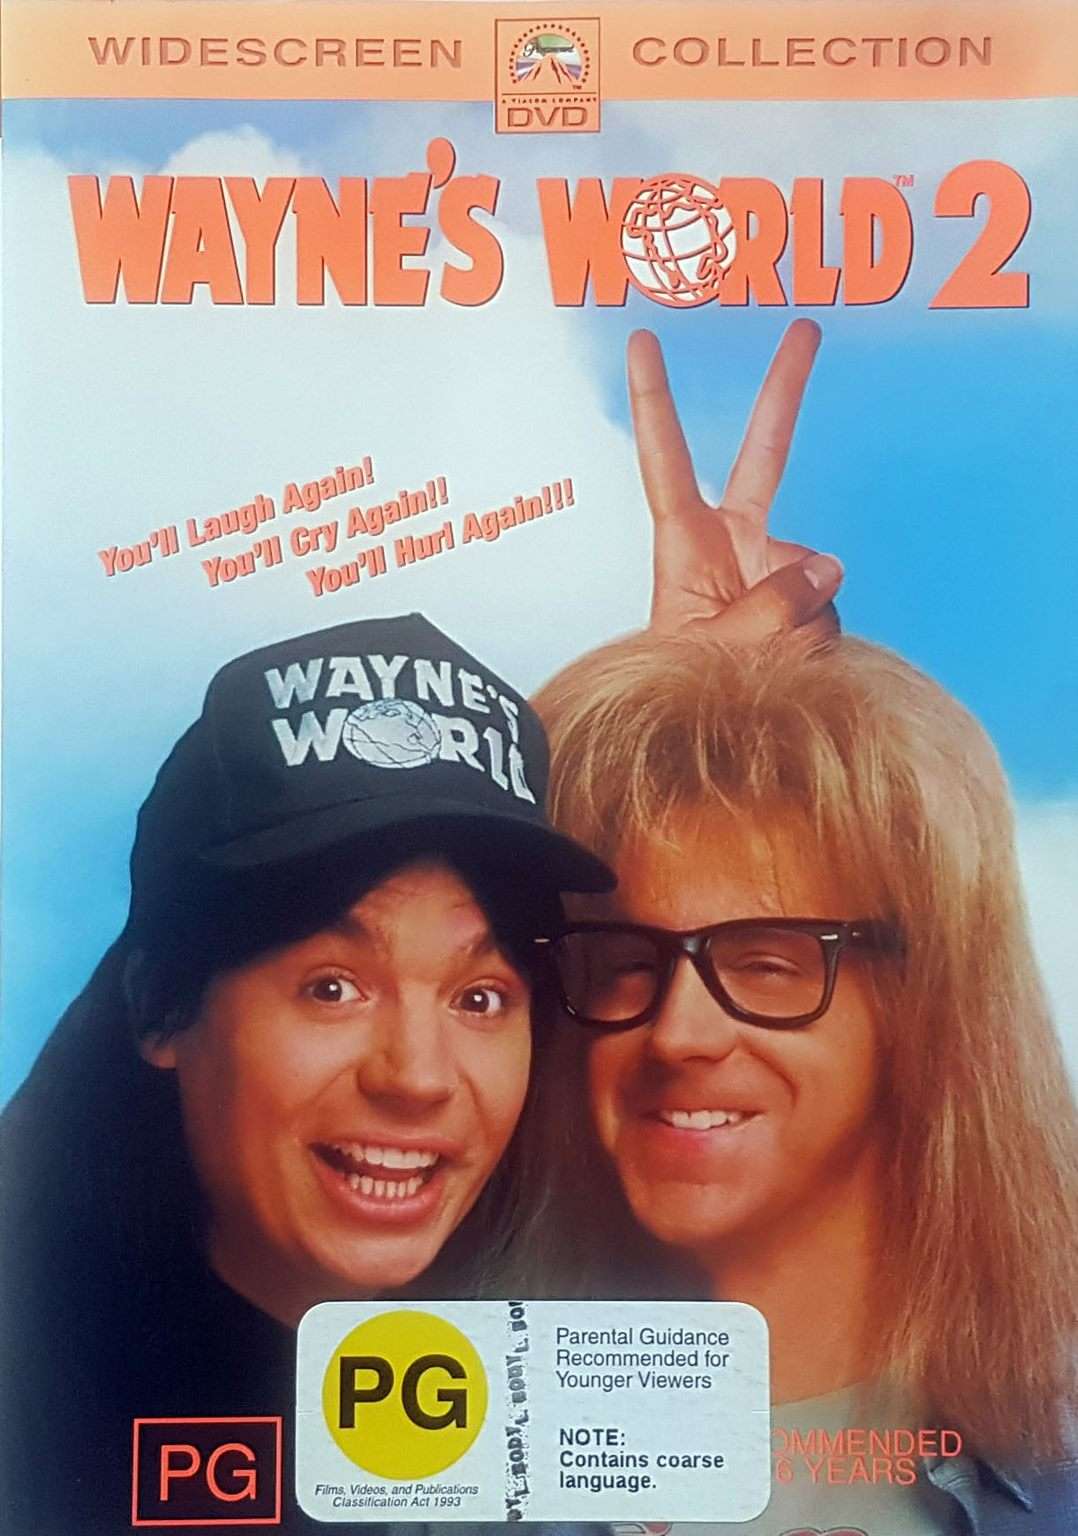 Wayne's World 2